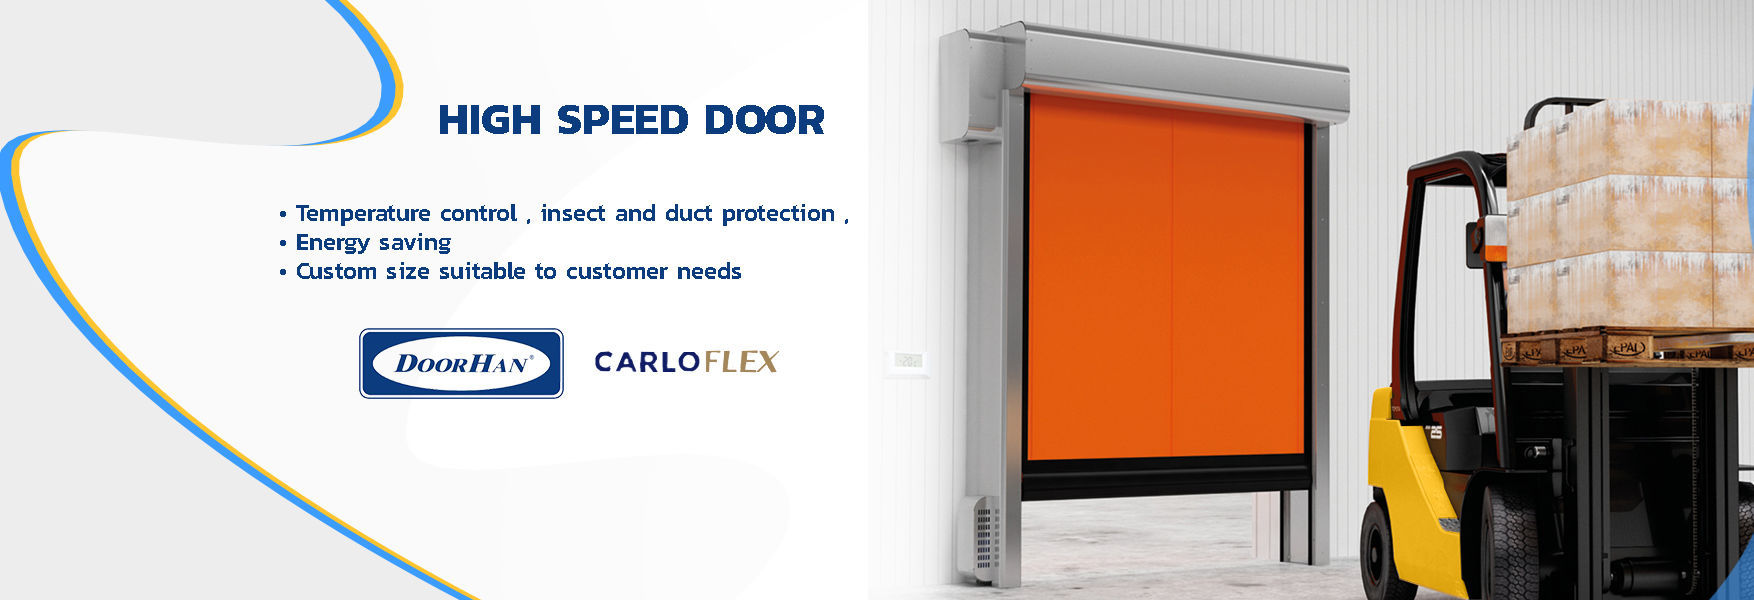 High Speed Door,DoorHan,Carloflex,Temperature control,insect and duct protection ,Energy sav